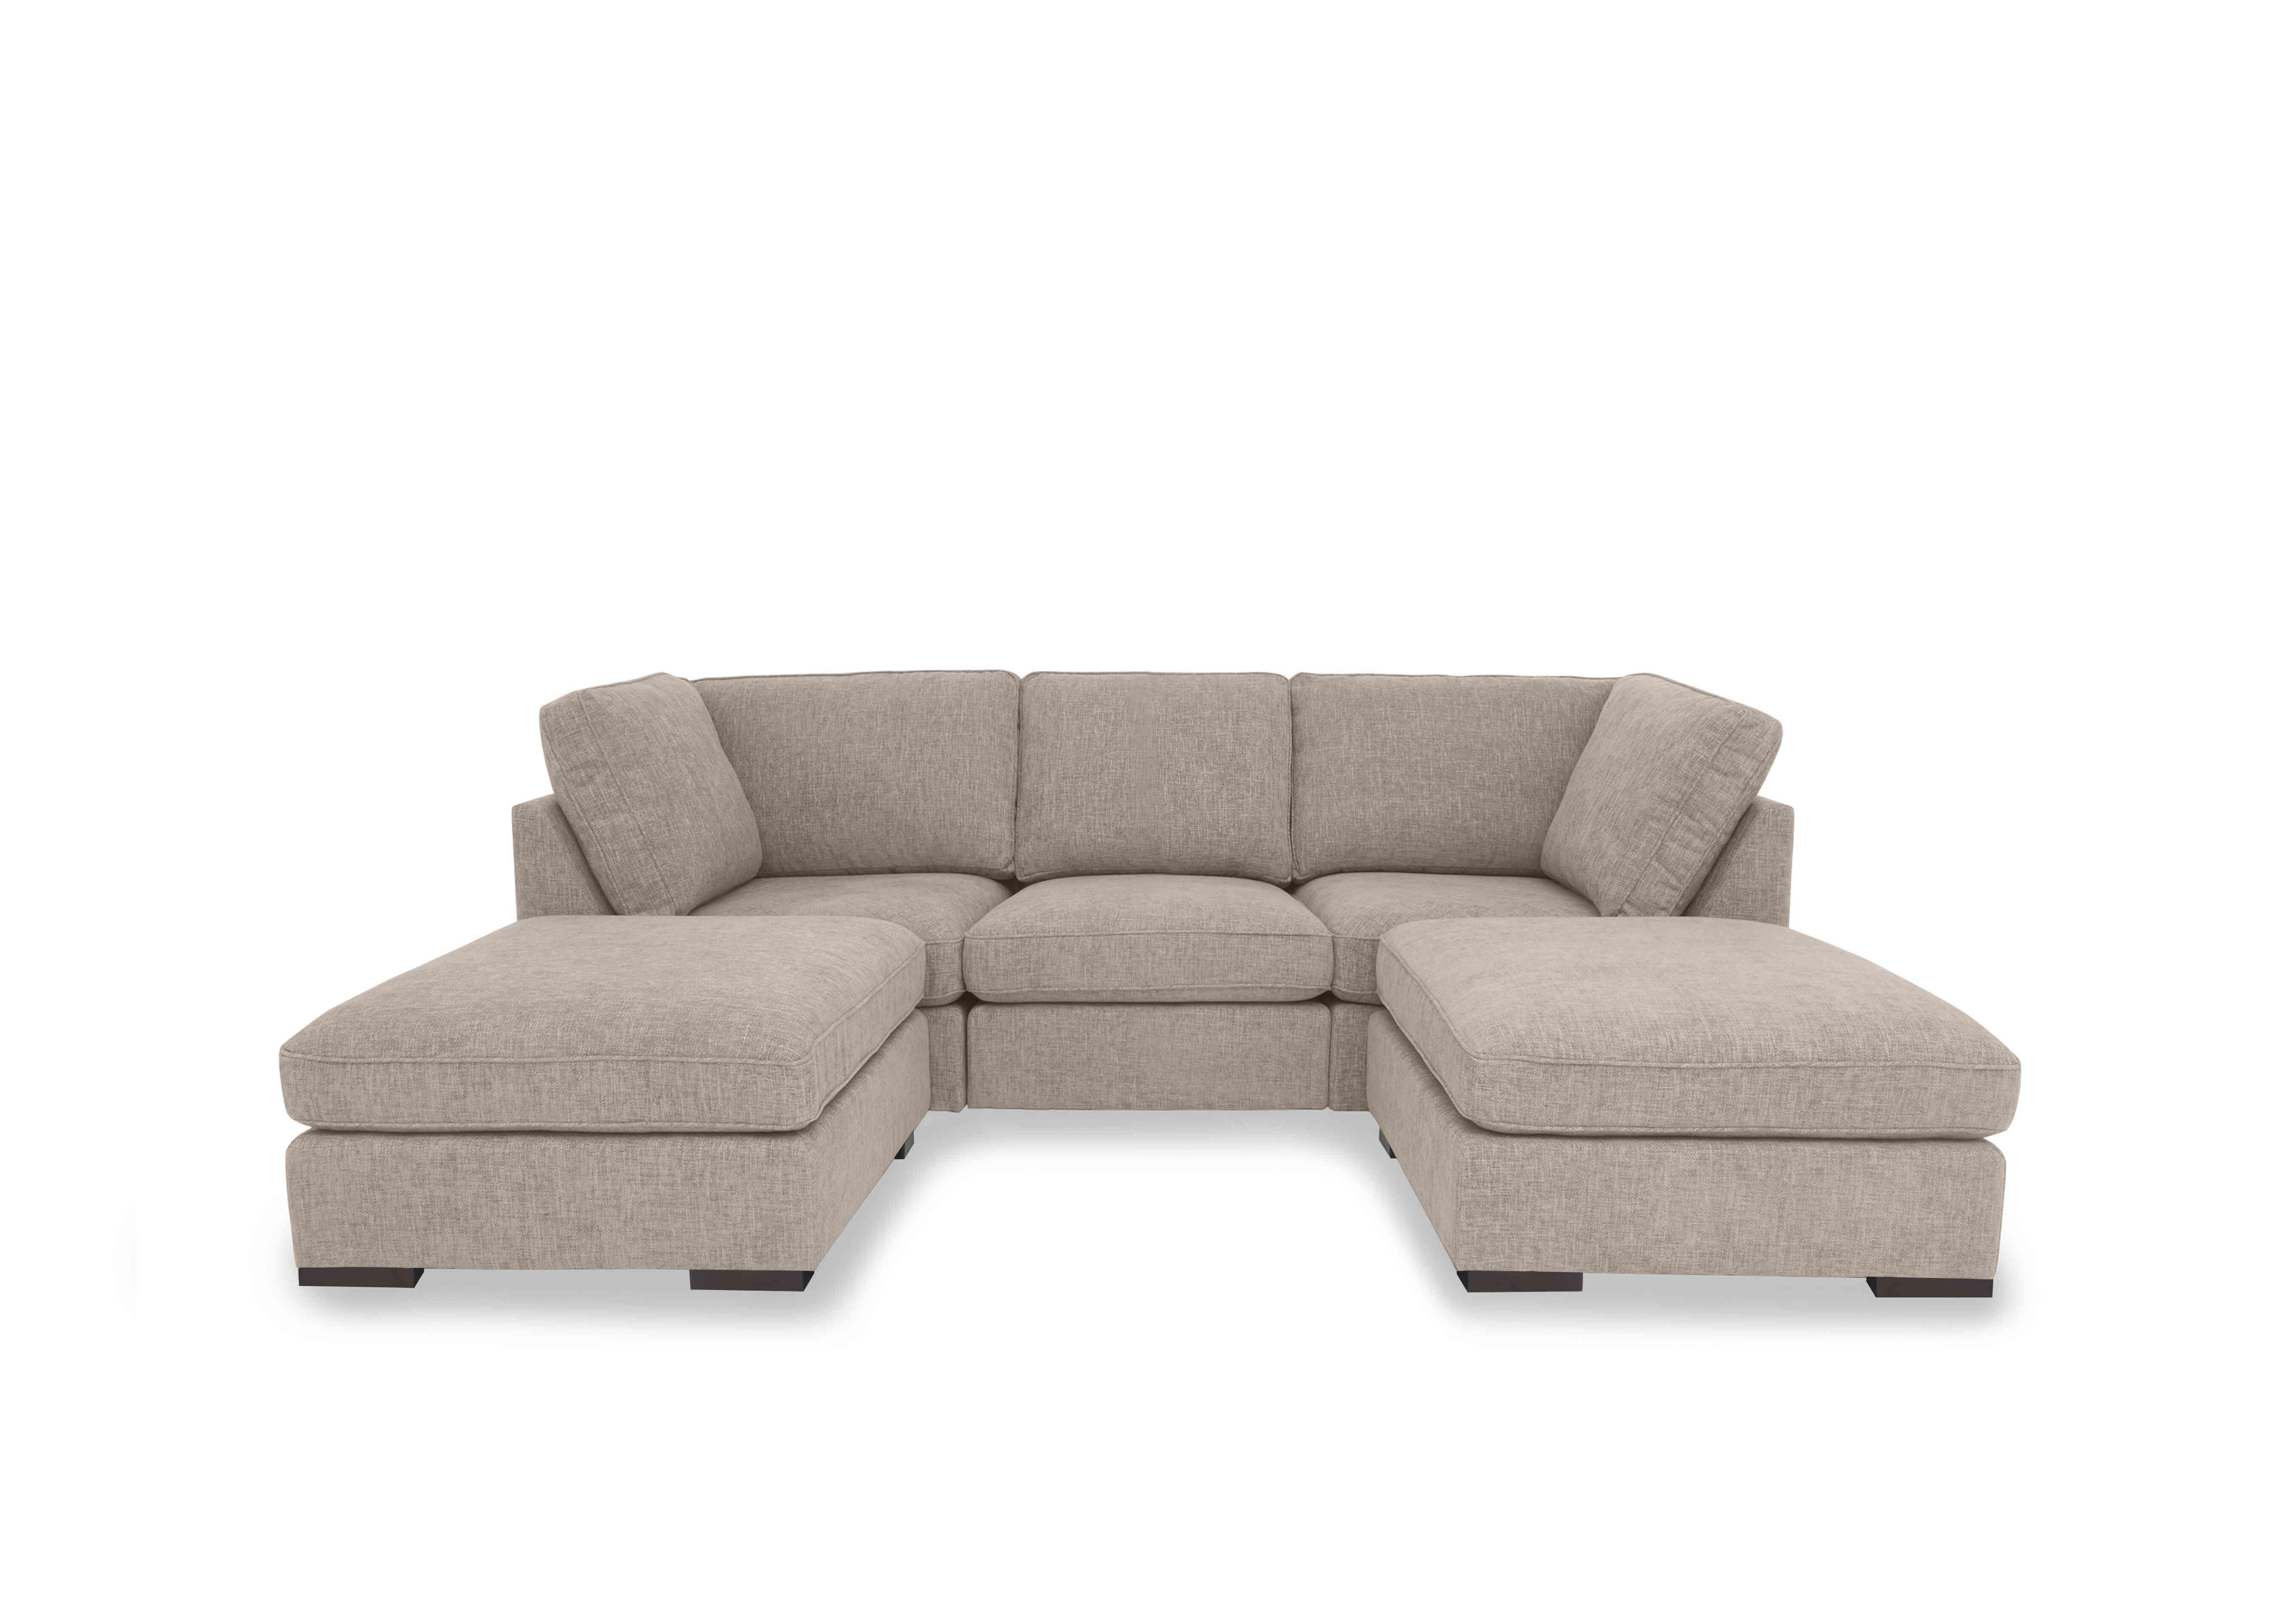 Ugo Small U Shaped Corner Sofa in Anivia Khaki 14445 on Furniture Village